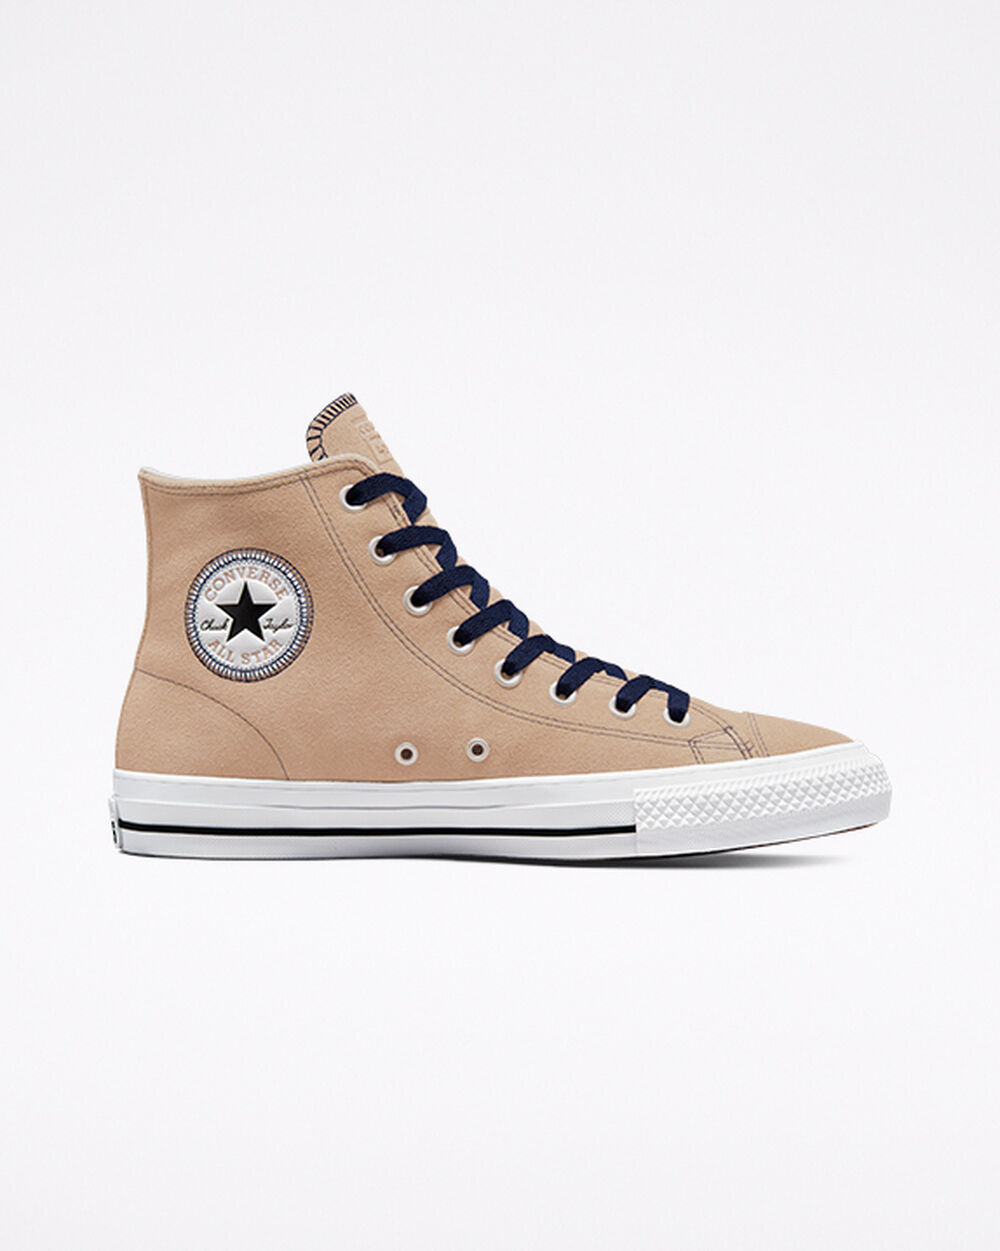 Converse CONS Chuck Taylor All Star Pro Sneakers Heren Khaki Zwart Wit | Nederland-86320